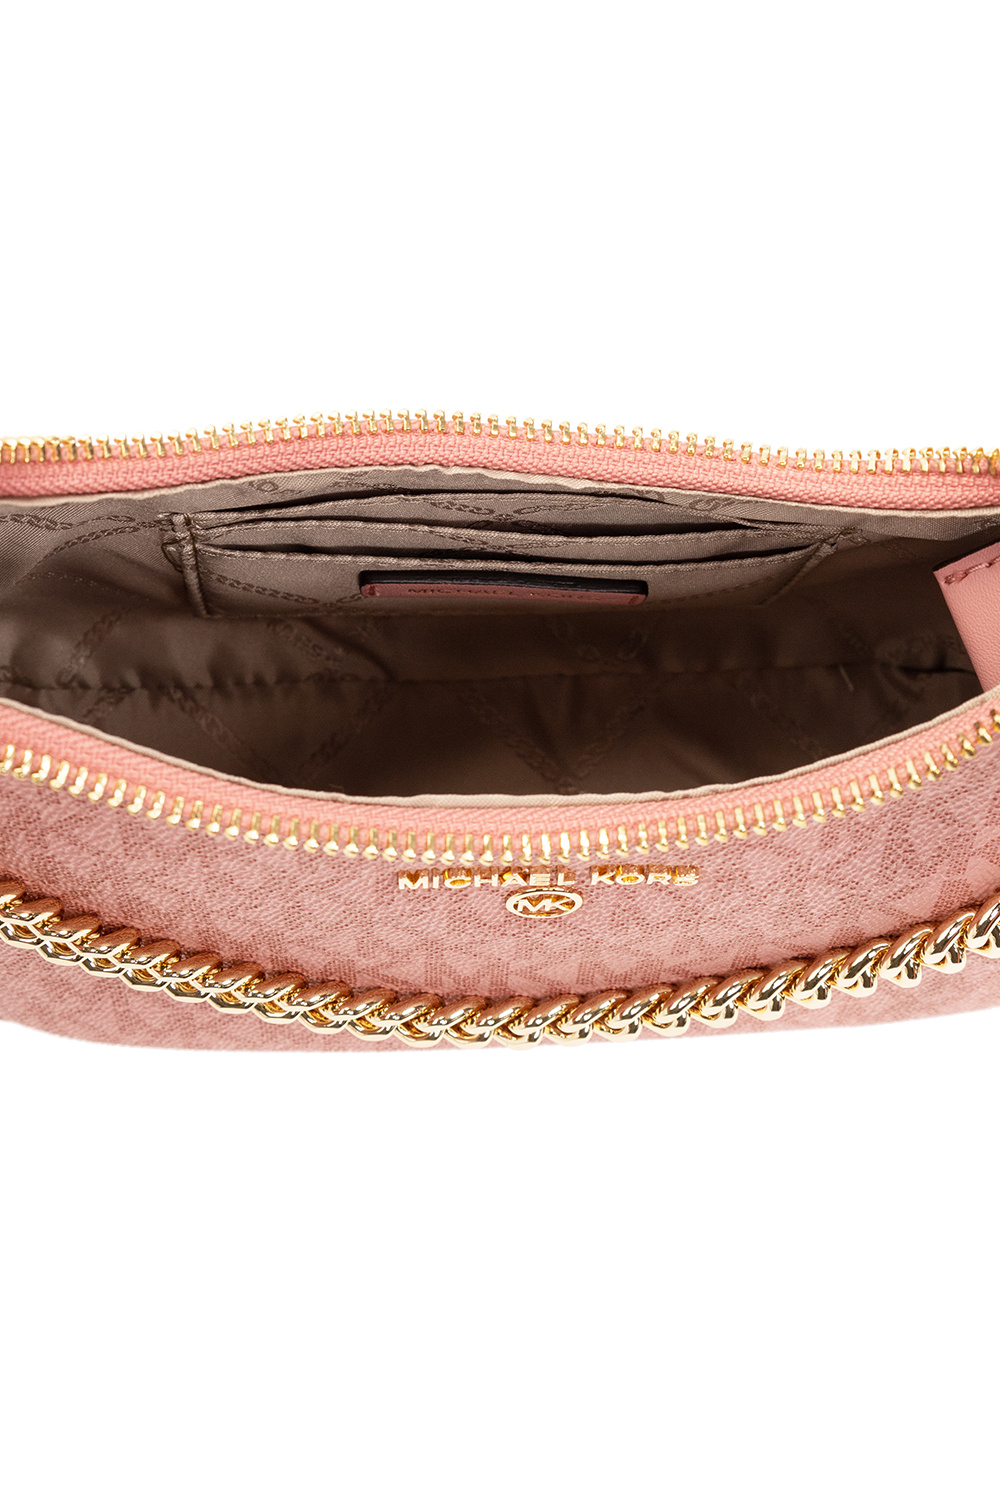 givenchy logo medium leather trimmed tote ‘Jet Set Charm Small’ handbag